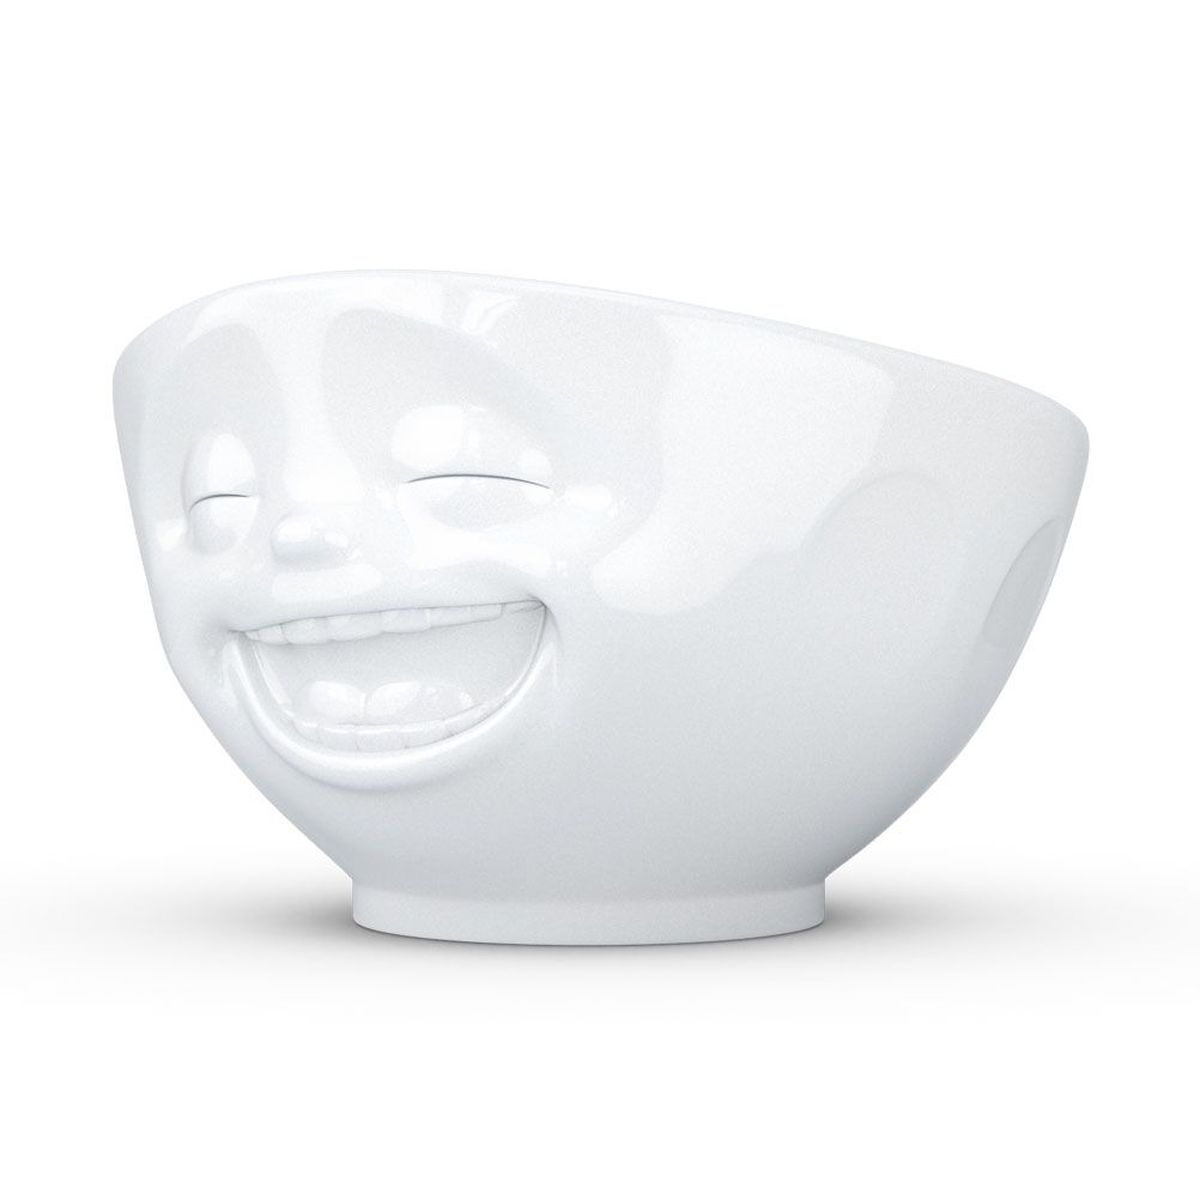 XL Mood Porcelain Bowl by Tassen 1000 ml - Laughing